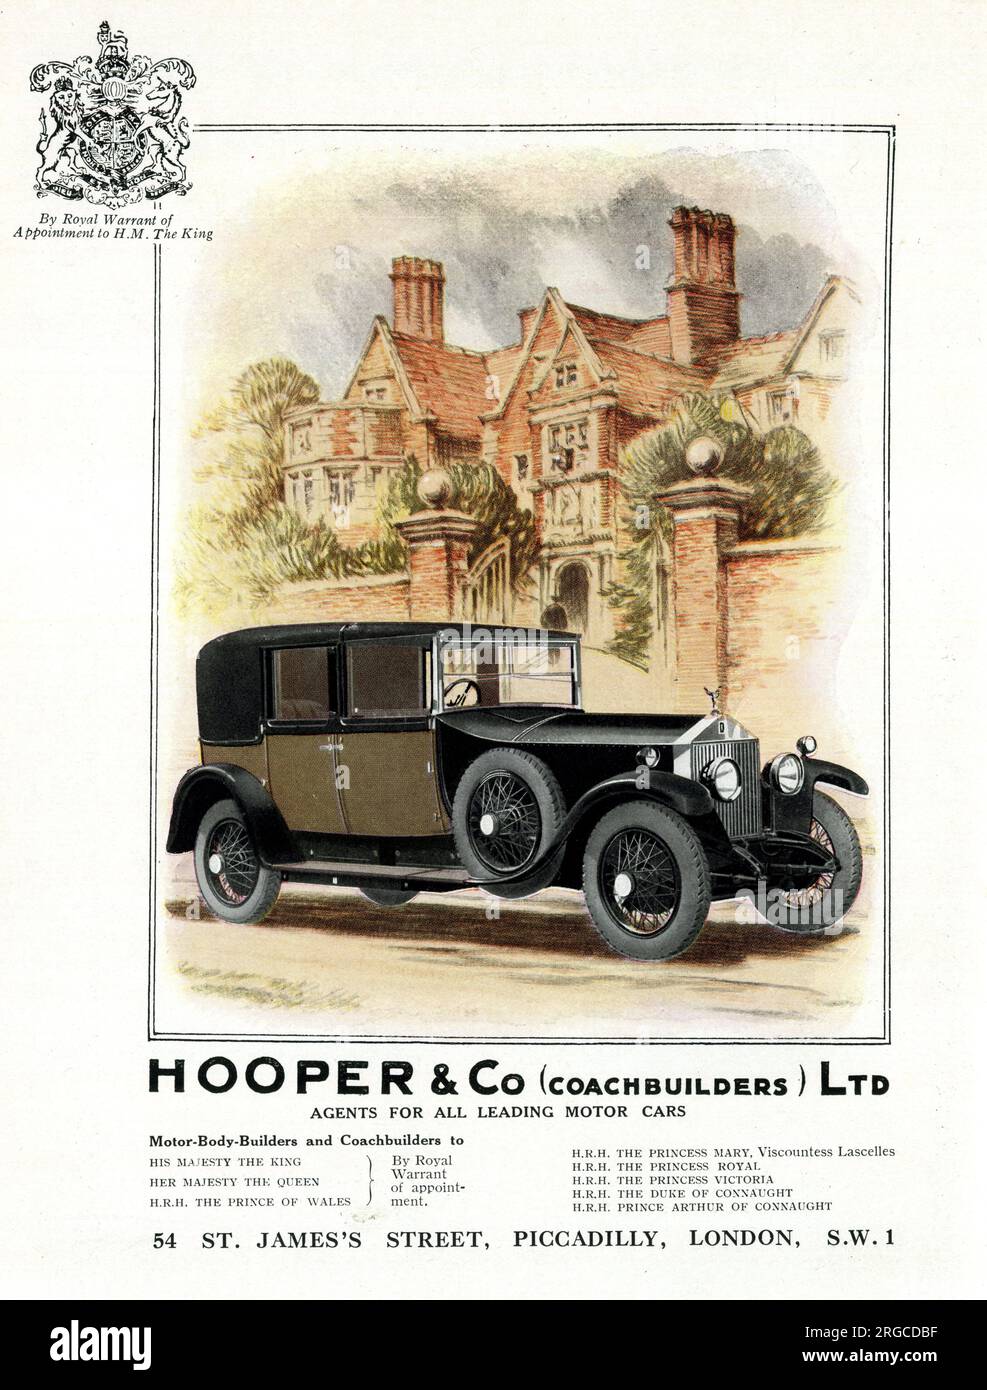 Advert, Hooper & Co (Coachbuilders) Ltd, agents for all leading motor cars, St James's Street, London SW1 Stock Photo